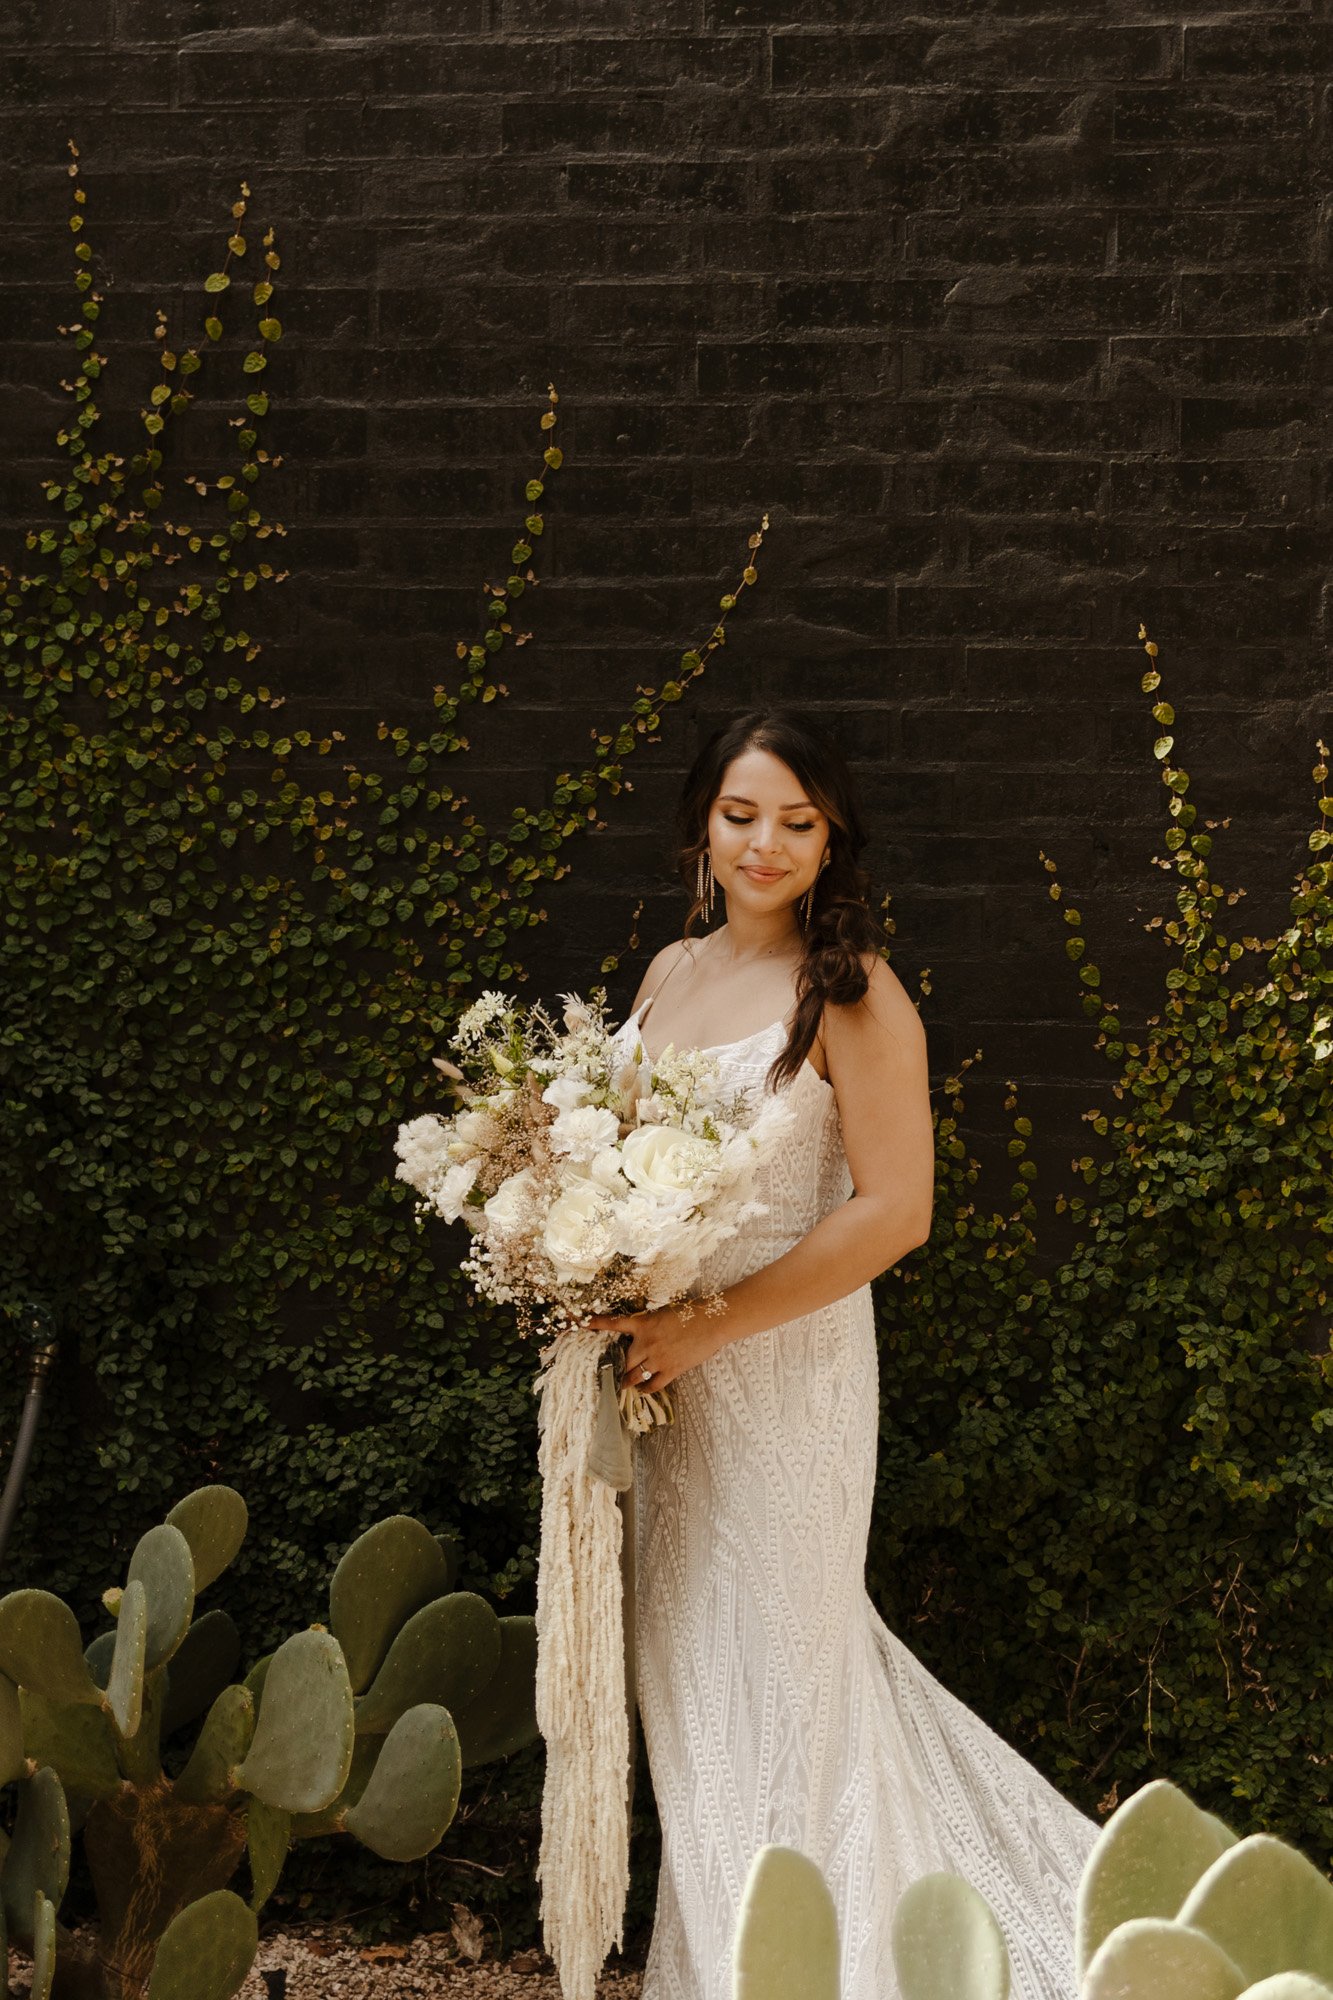 a rue de seine wedding dress on a styled bride in a texas micro wedding venue